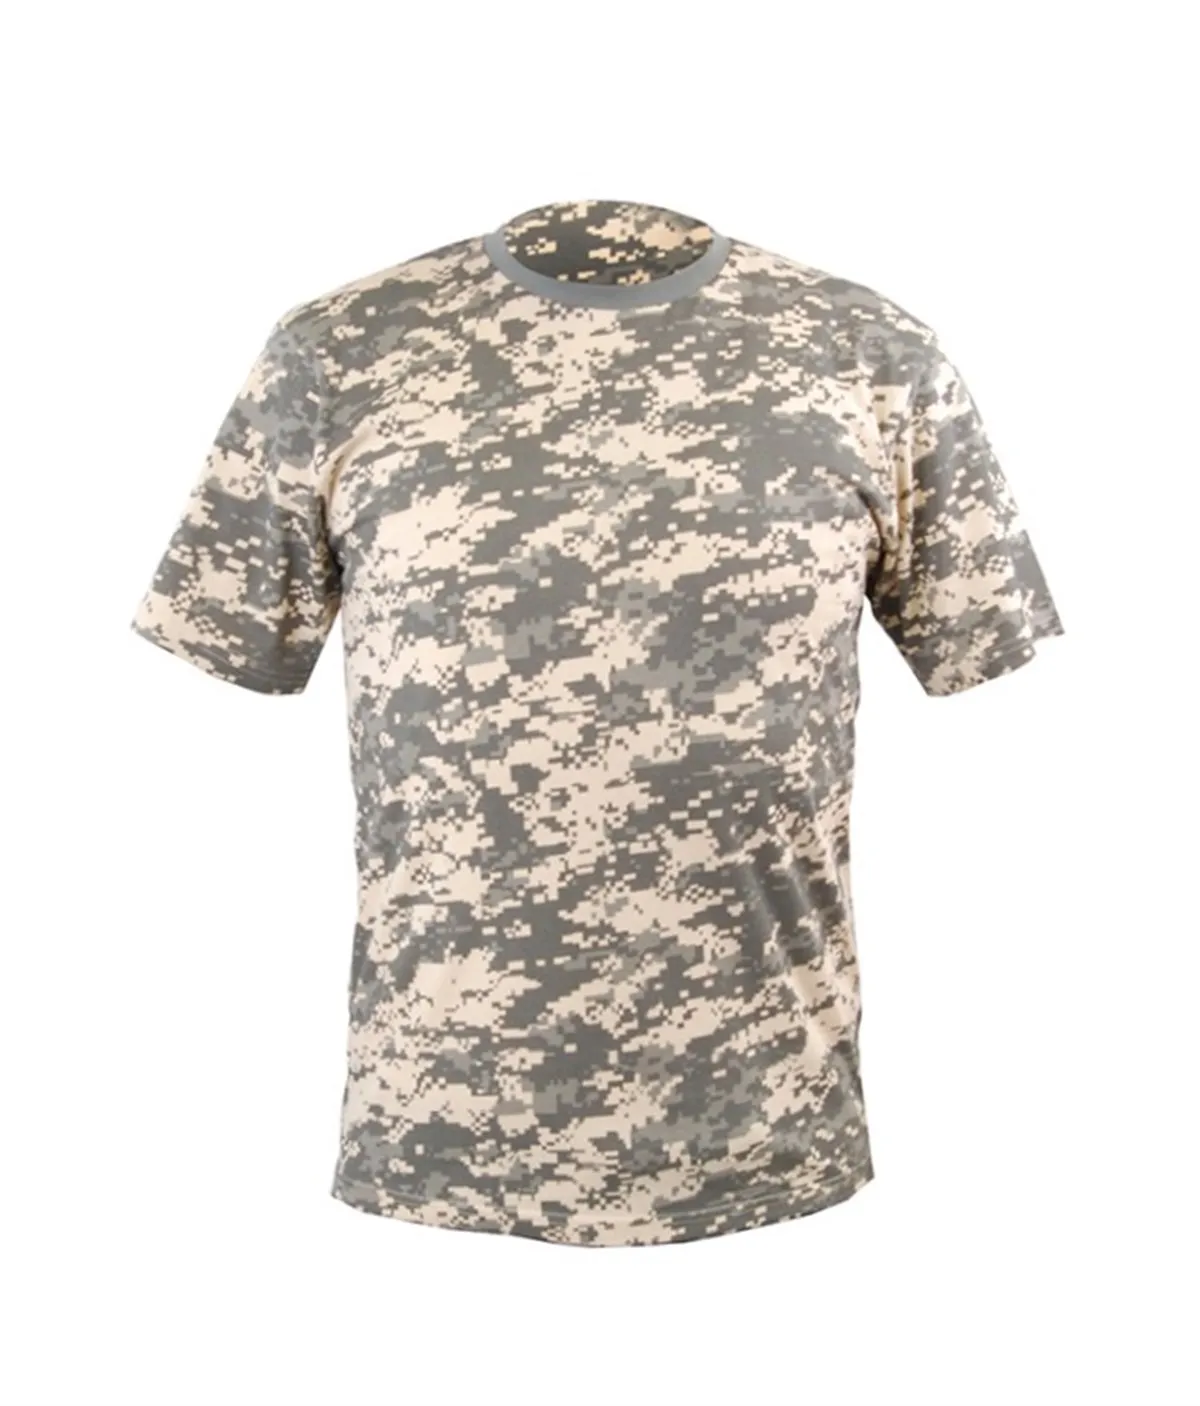 

YDS Mil-Tec Dijital T-Shirt Adults Camo T-Shirt Airsoft Military Multi Terrain Pattern MTP Multicam t Shirt